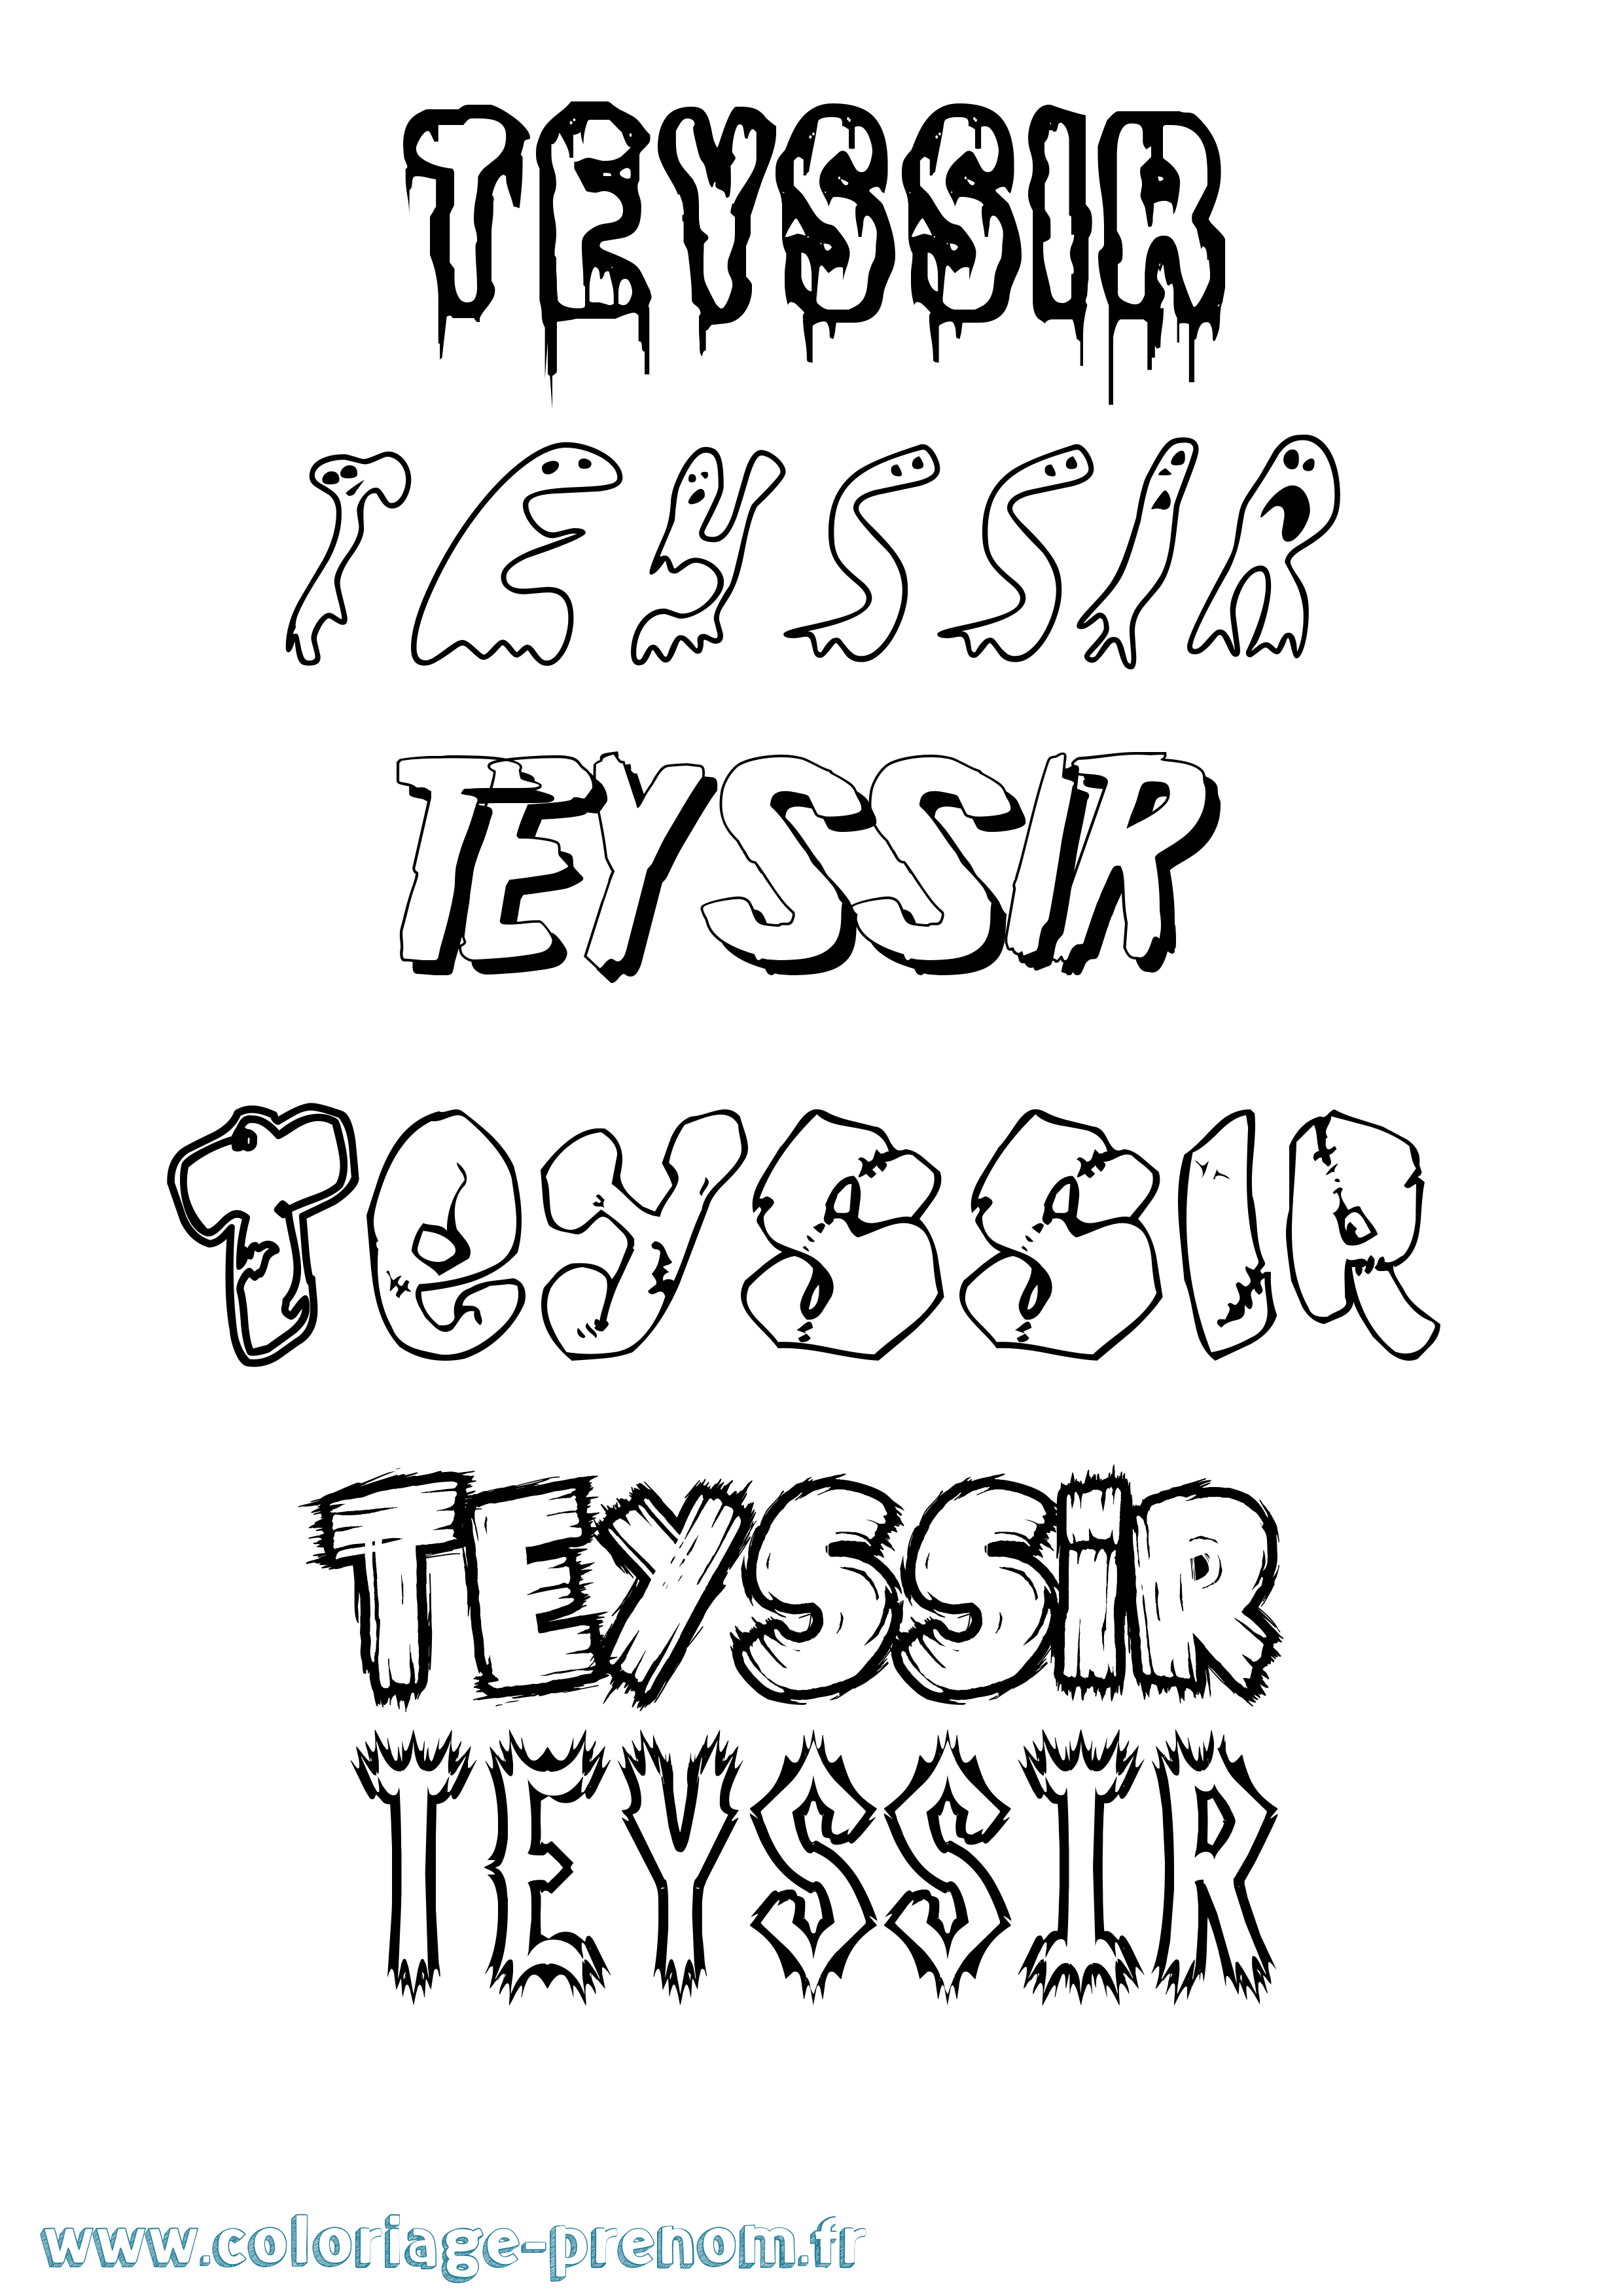 Coloriage prénom Teyssir Frisson